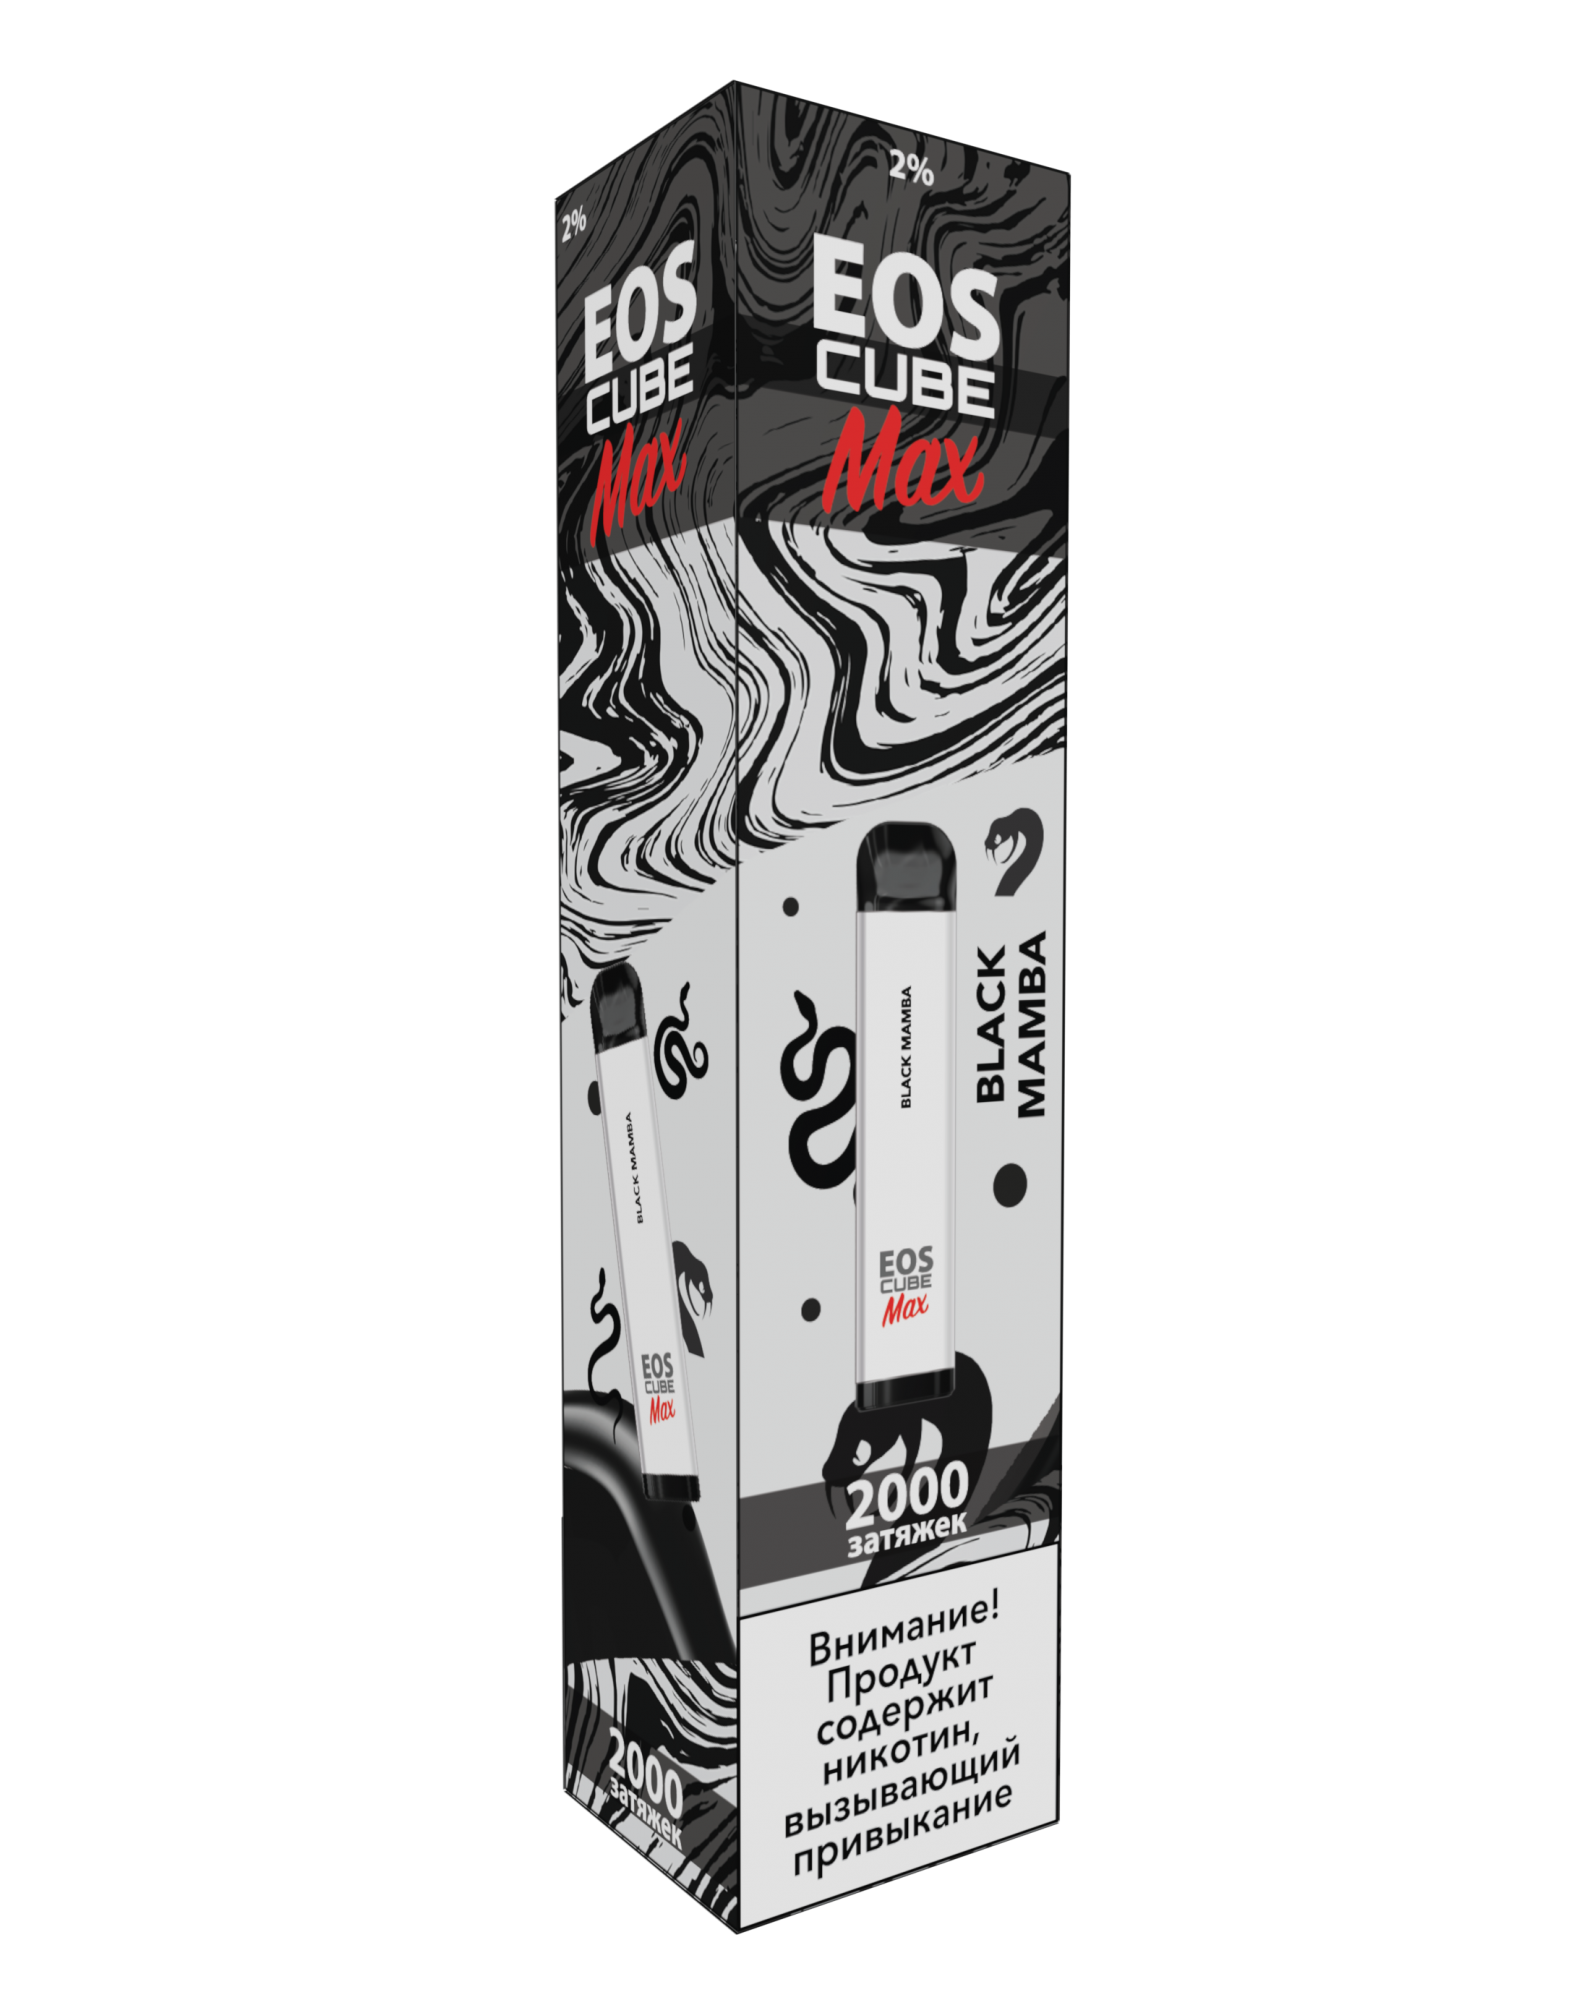 Cube max. EOS электронная сигарета. EOS Cube. Одноразовые электронные сигареты. Black Mamba электронная сигарета.